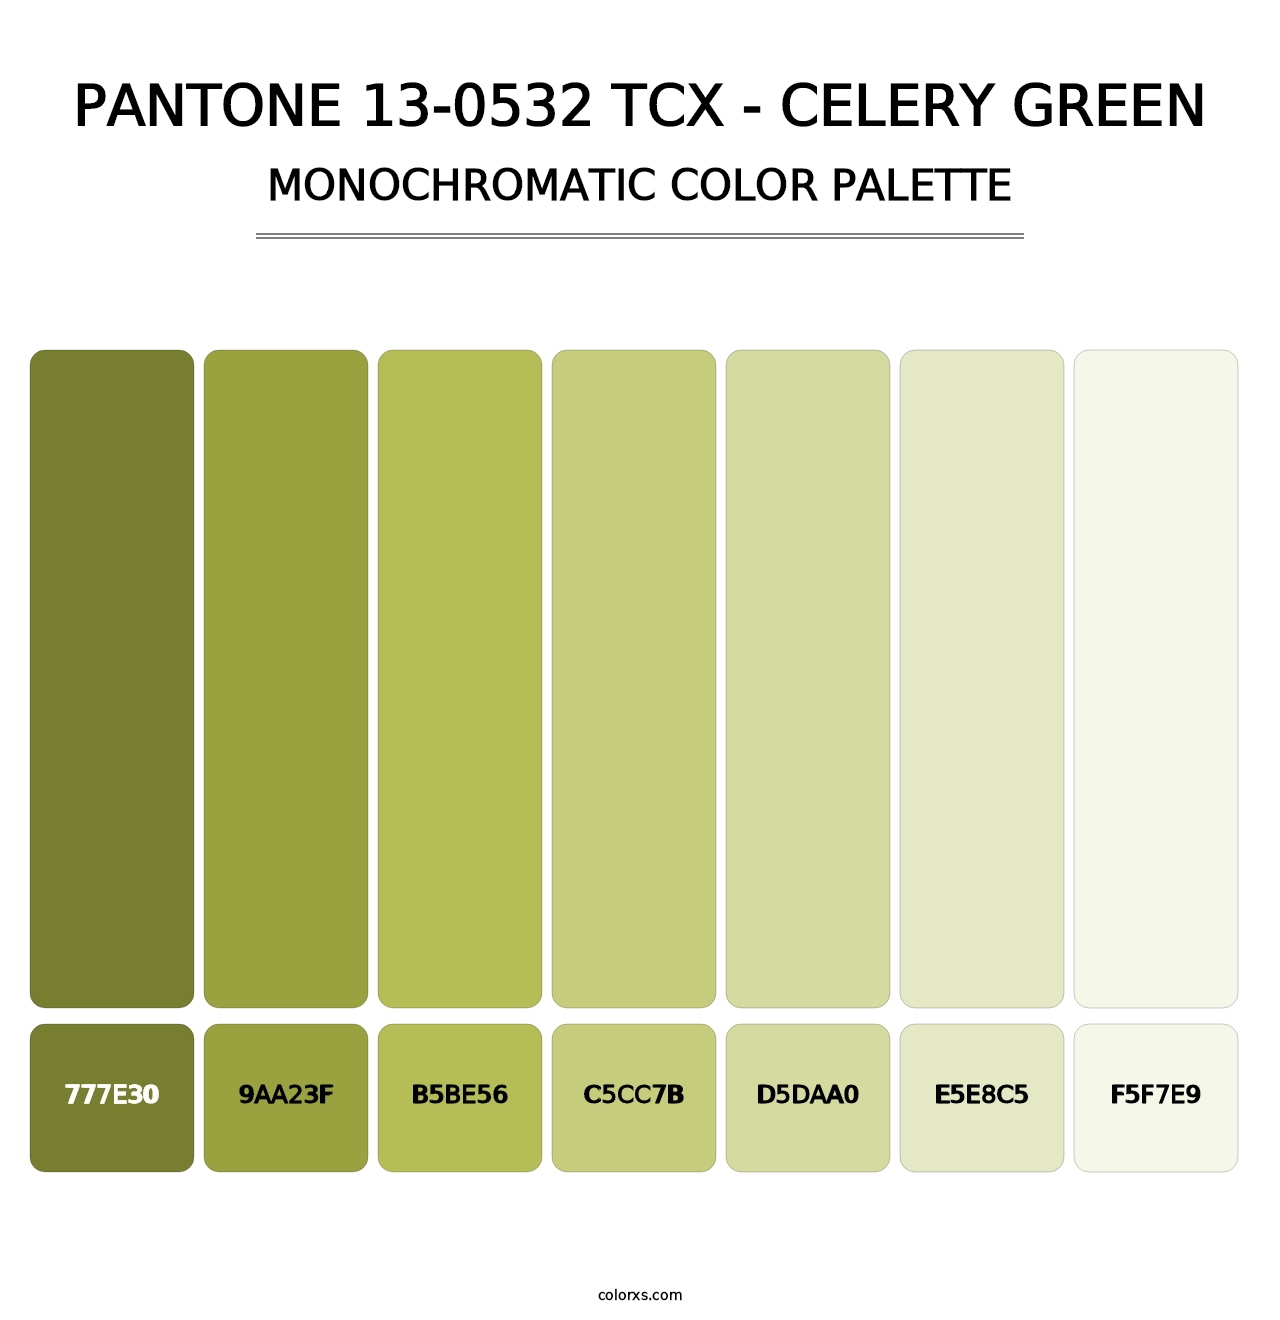 PANTONE 13-0532 TCX - Celery Green - Monochromatic Color Palette